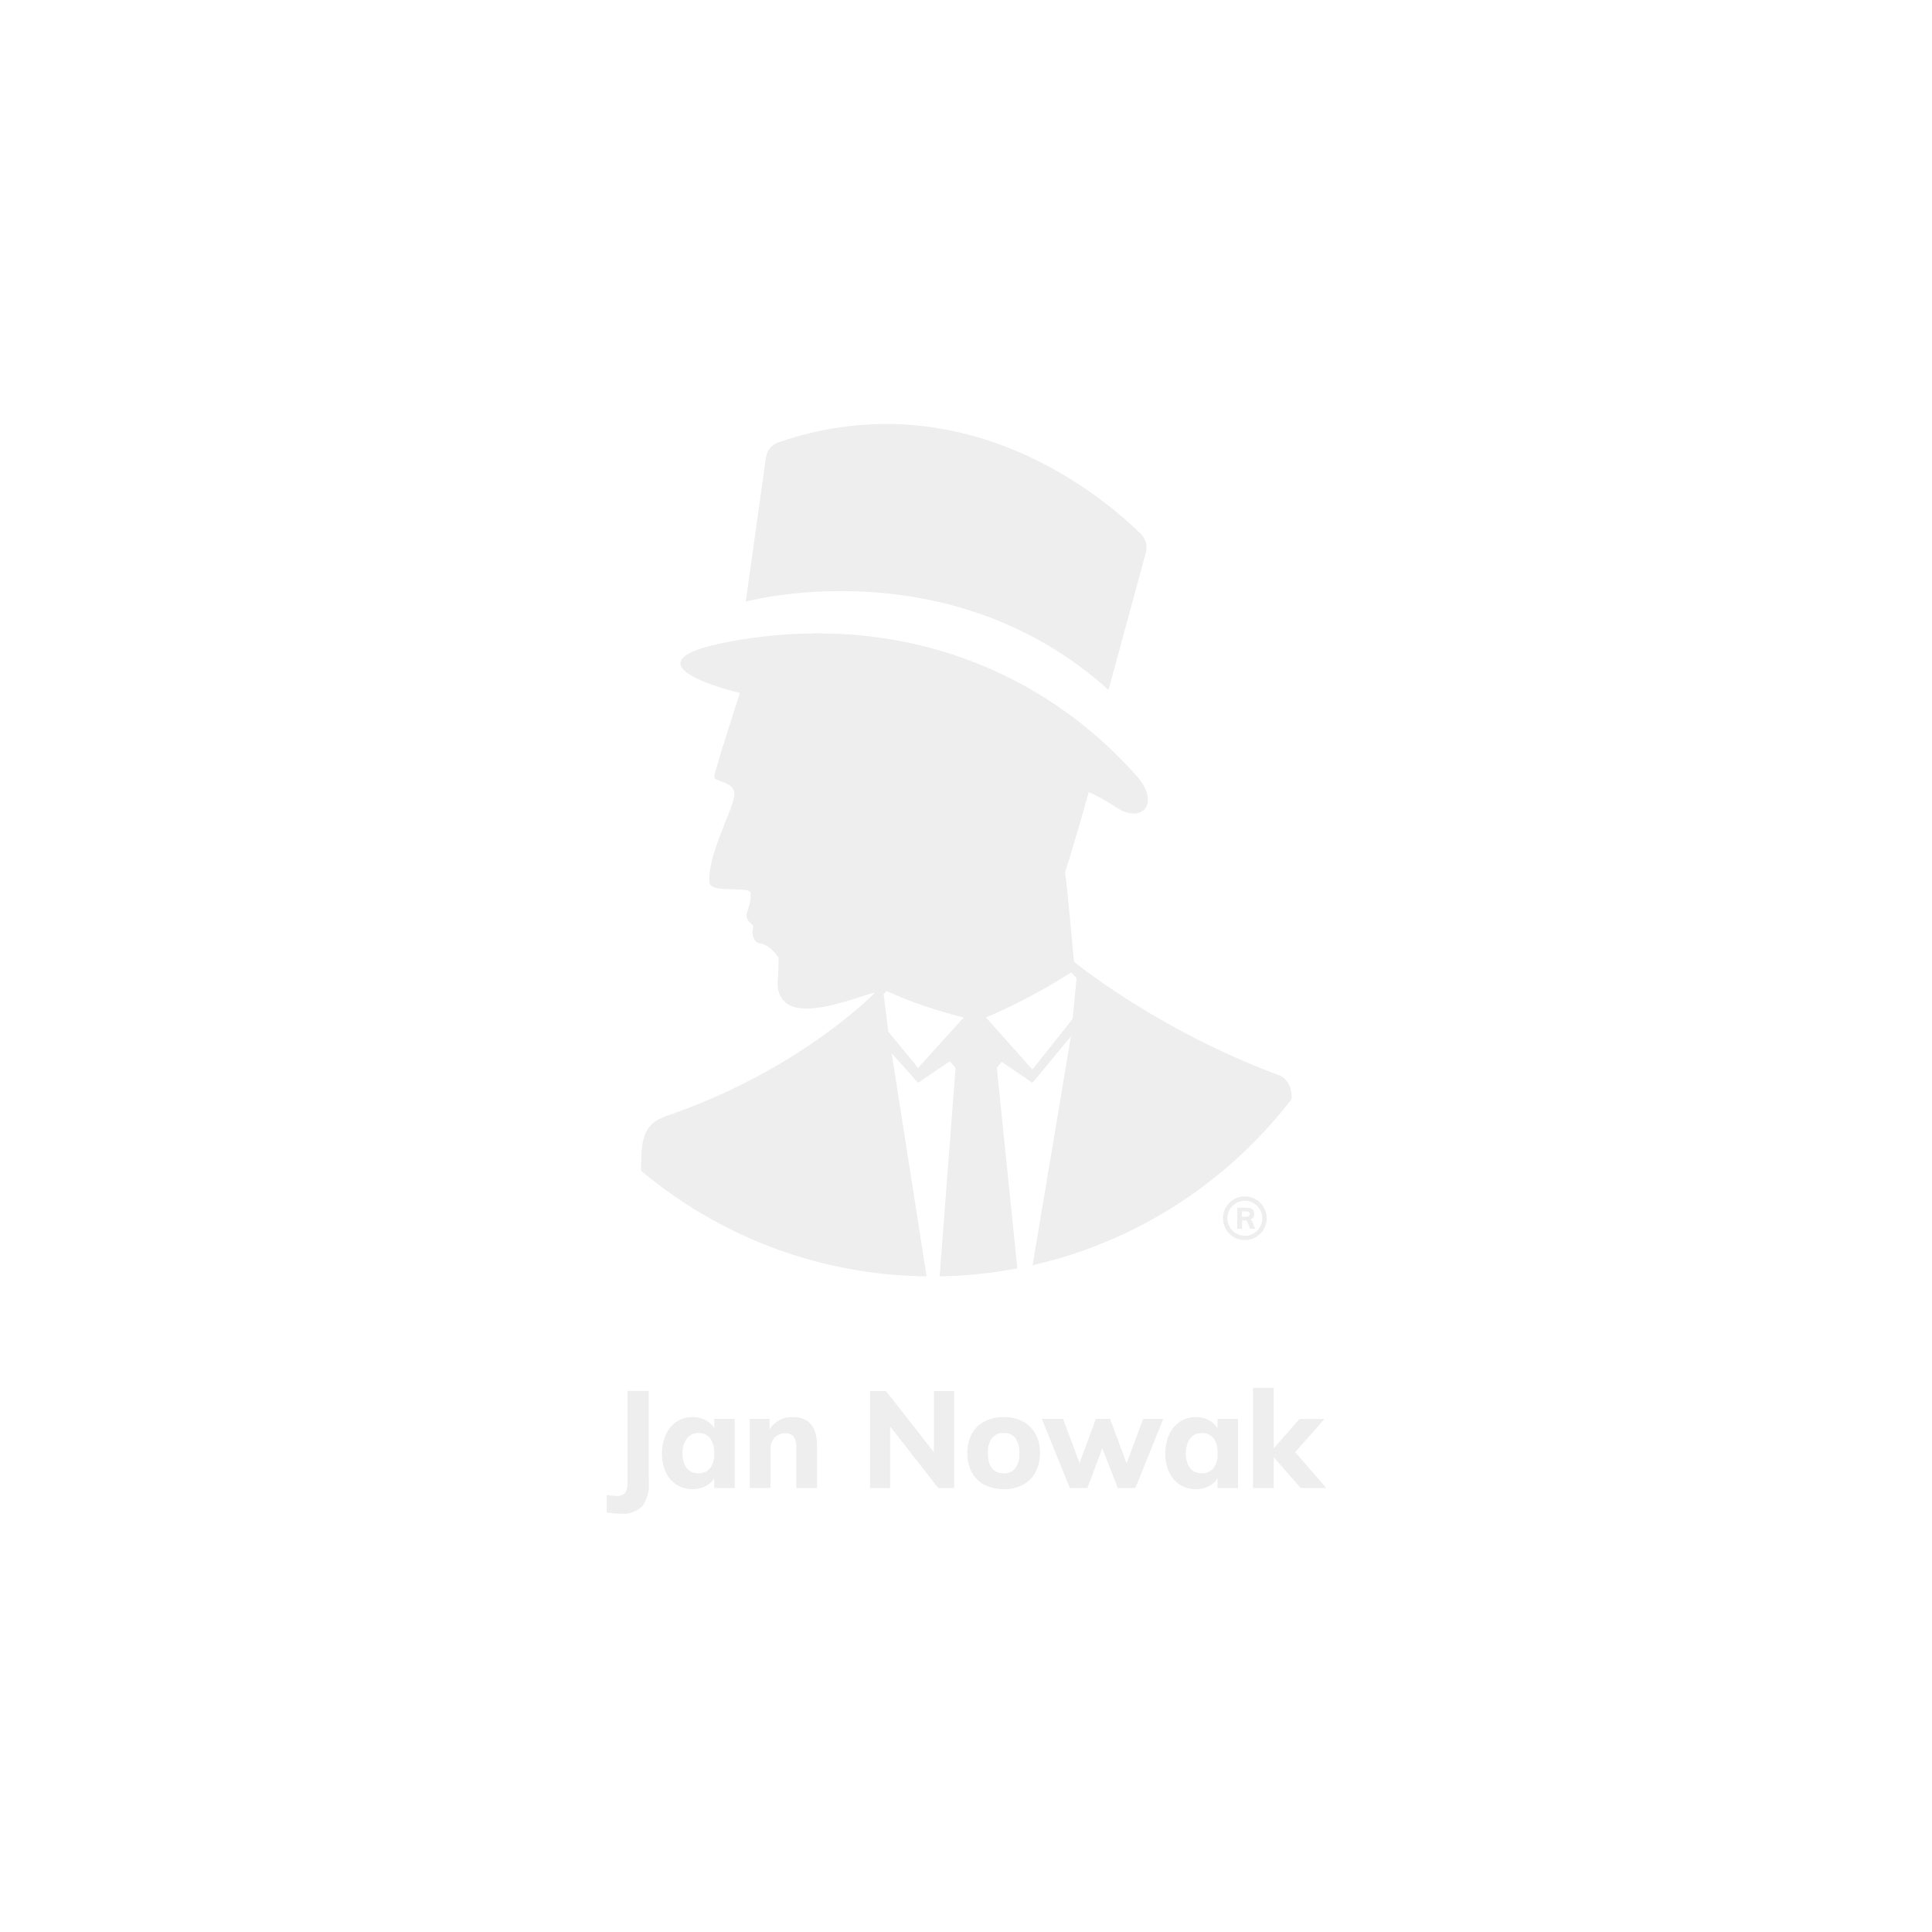 JAN NOWAK model FILIP 900x1850x400 biurowa szafa metalowa z sejfem na akta i dokumenty: szara